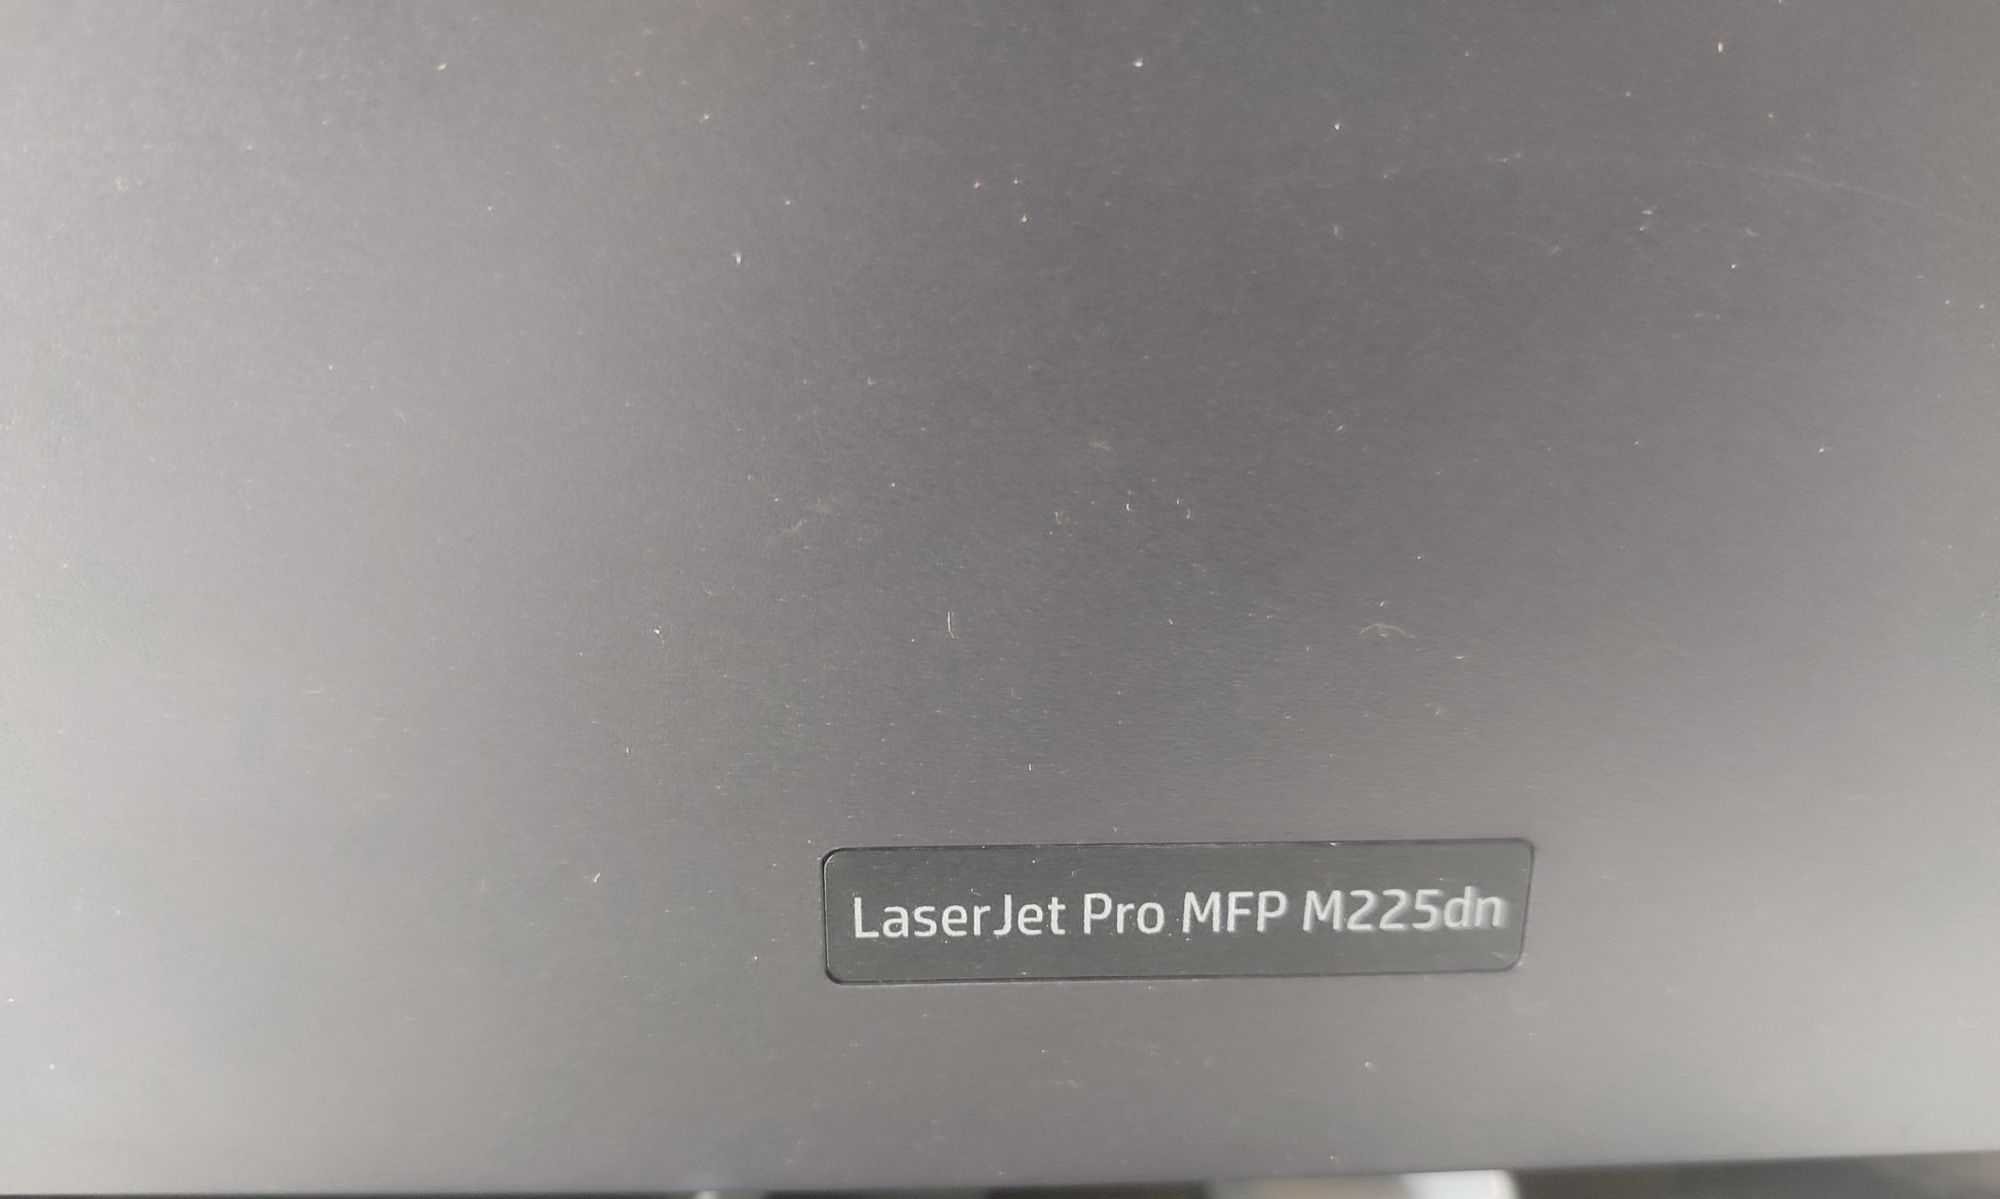 Мфу принтер сканер копир HP laserJet Pro MFP M225dn состояние отличное